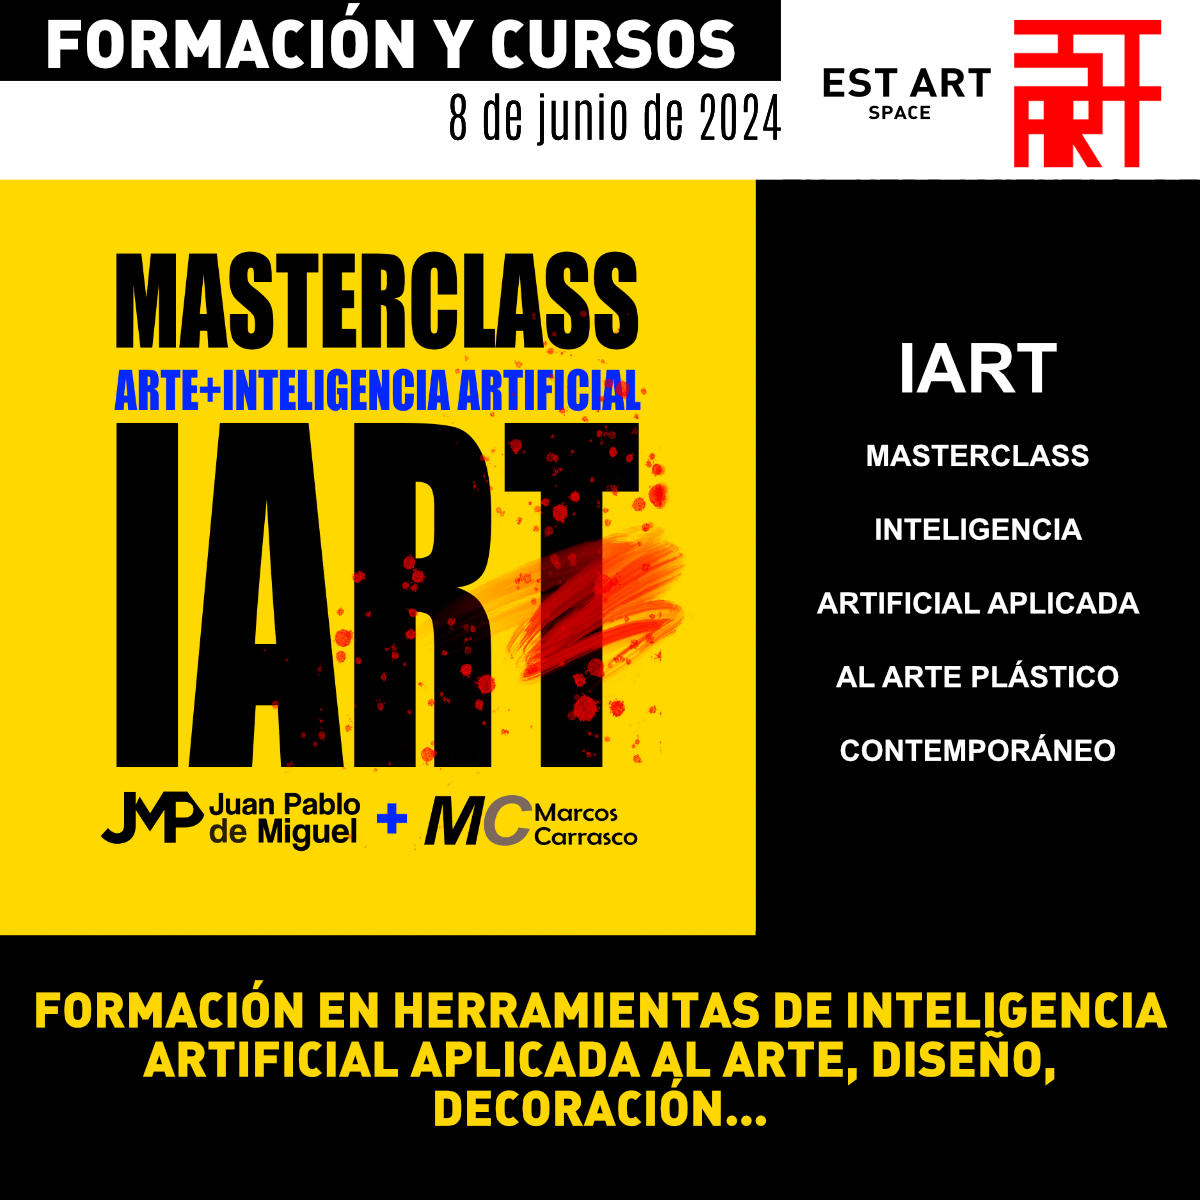 Curso IART MASTERCLASS INTELIGENCIA ARTIFICIAL APLICADA AL ARTE PLÁSTICO CONTEMPORÁNEO. EST_ART Space Alcobendas, Madrid